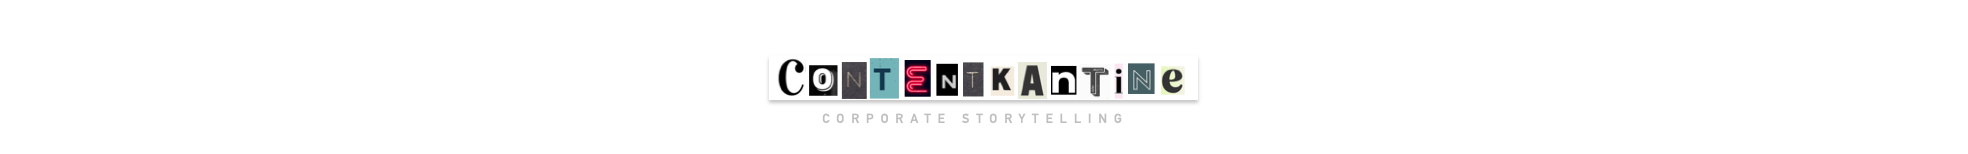 Contentkantine Logo